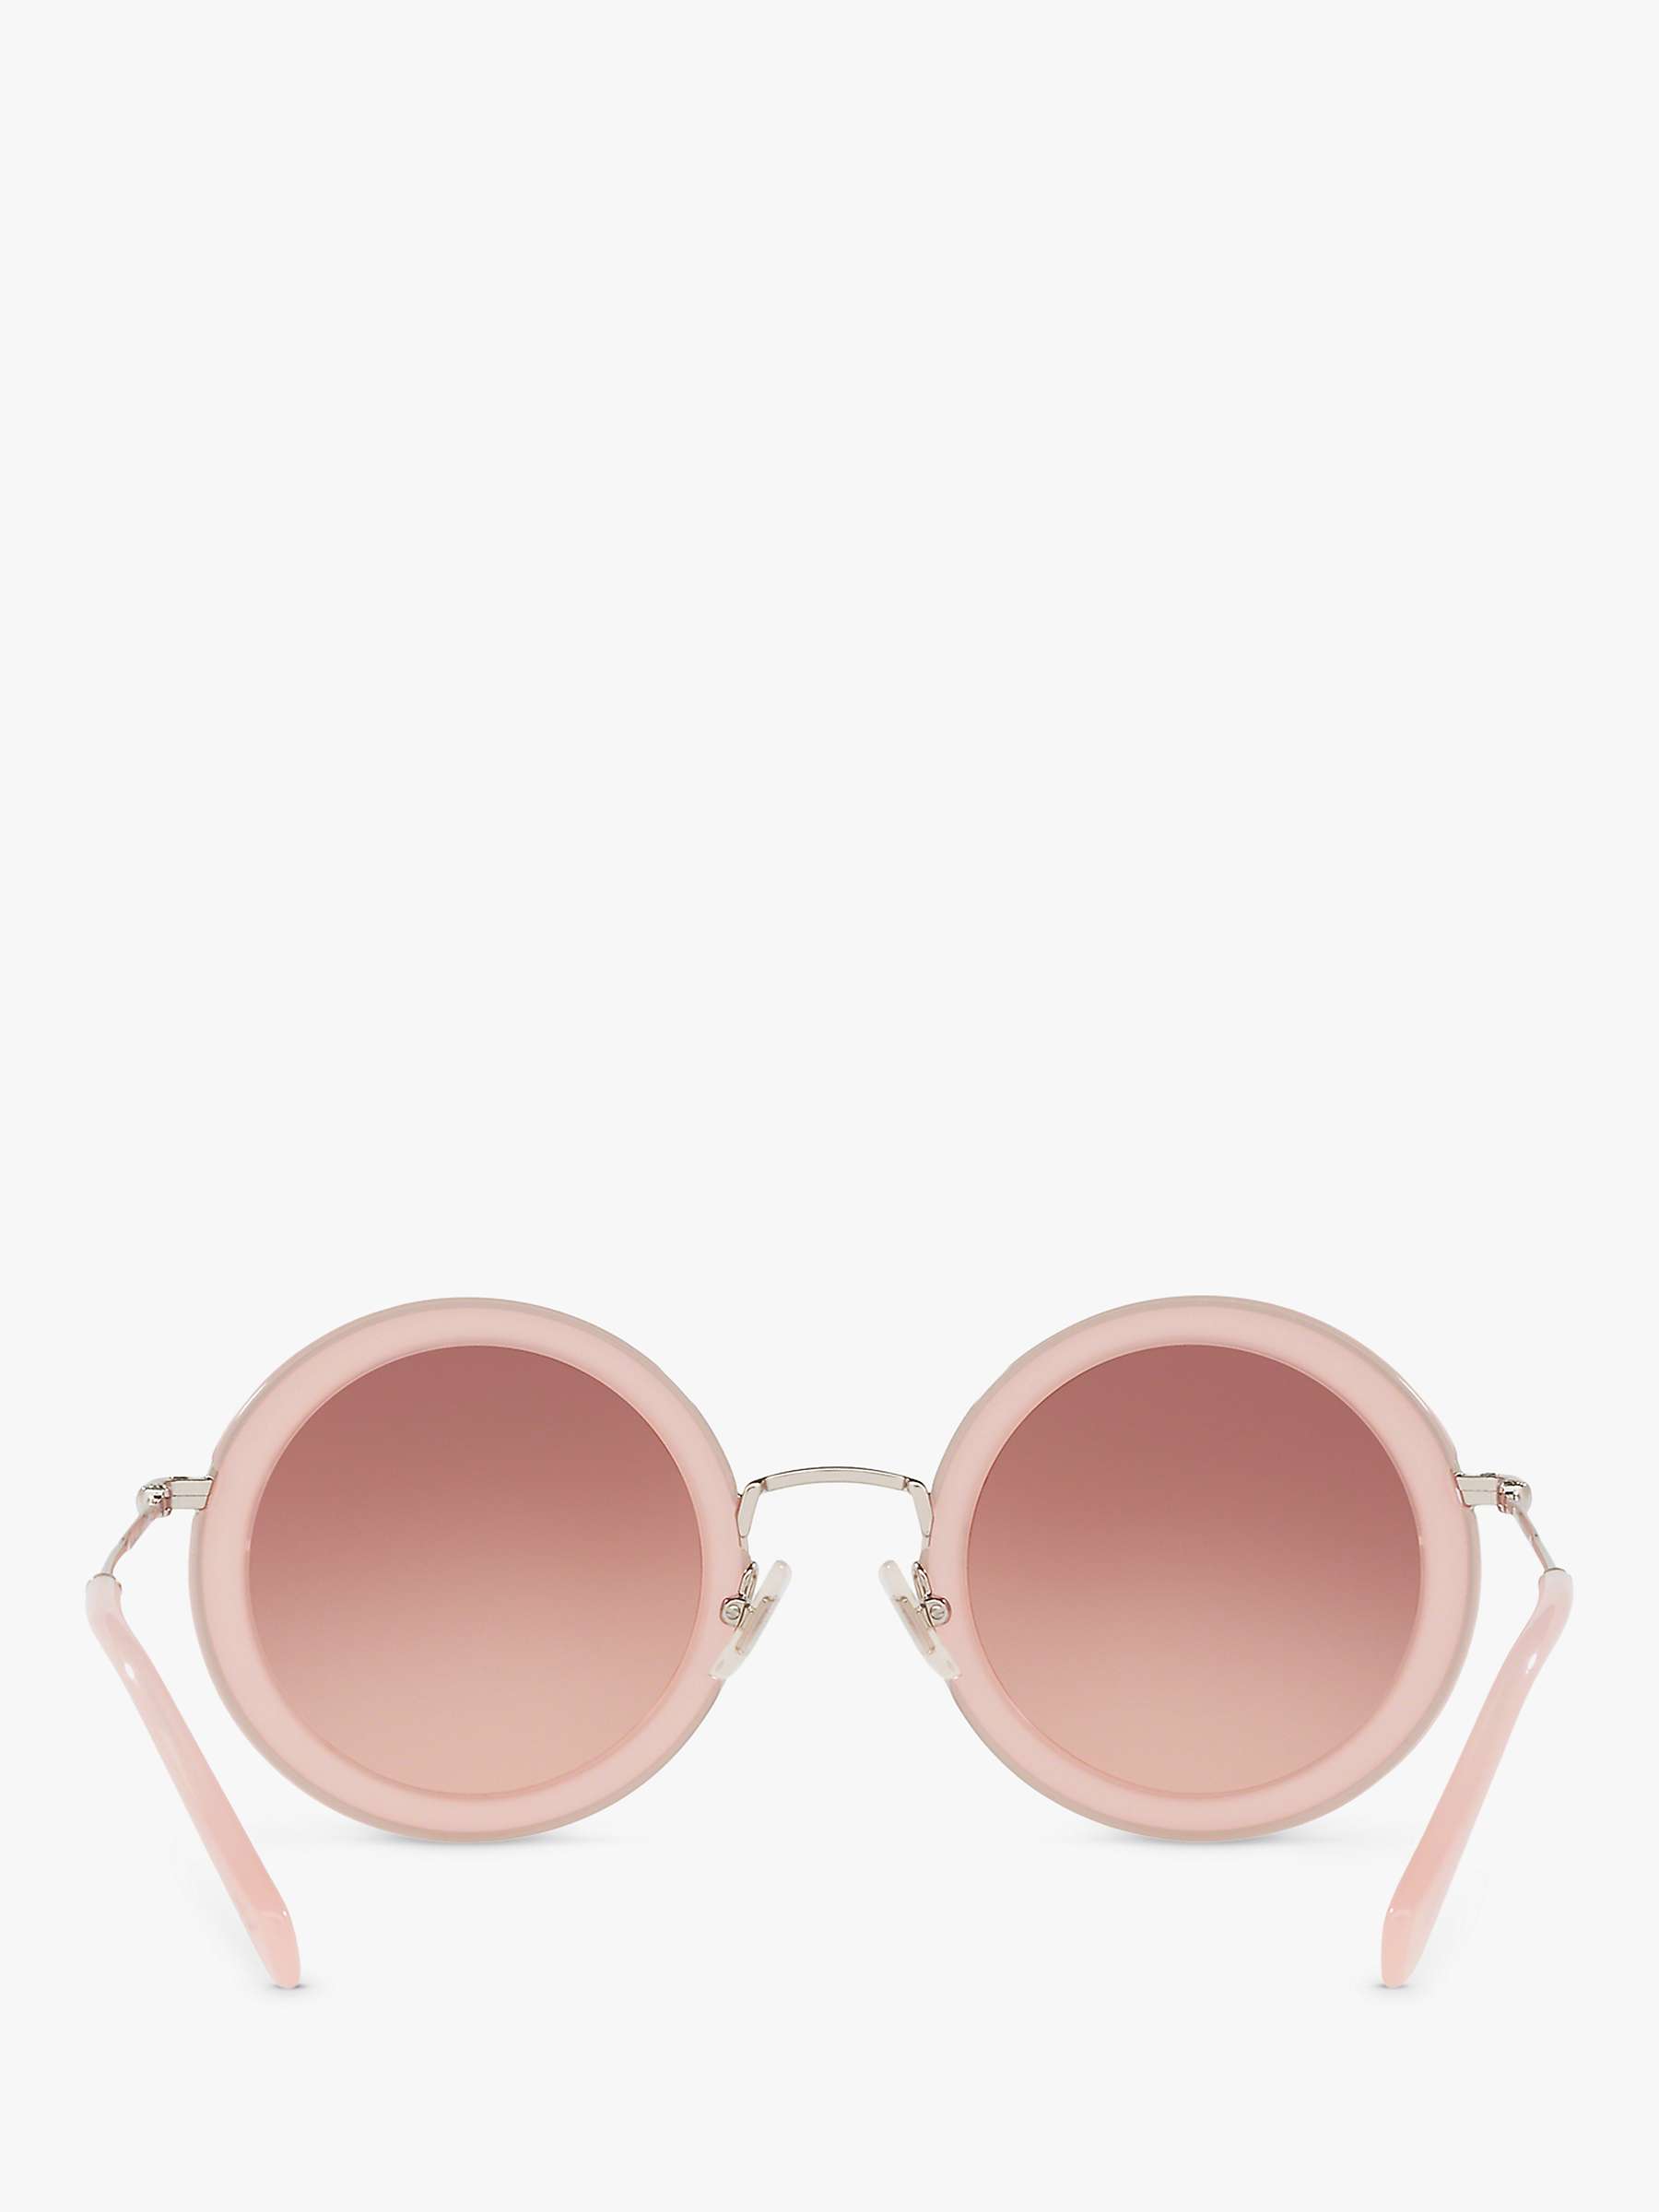 Buy Miu Miu MU 59US Women's Round Sunglasses Online at johnlewis.com